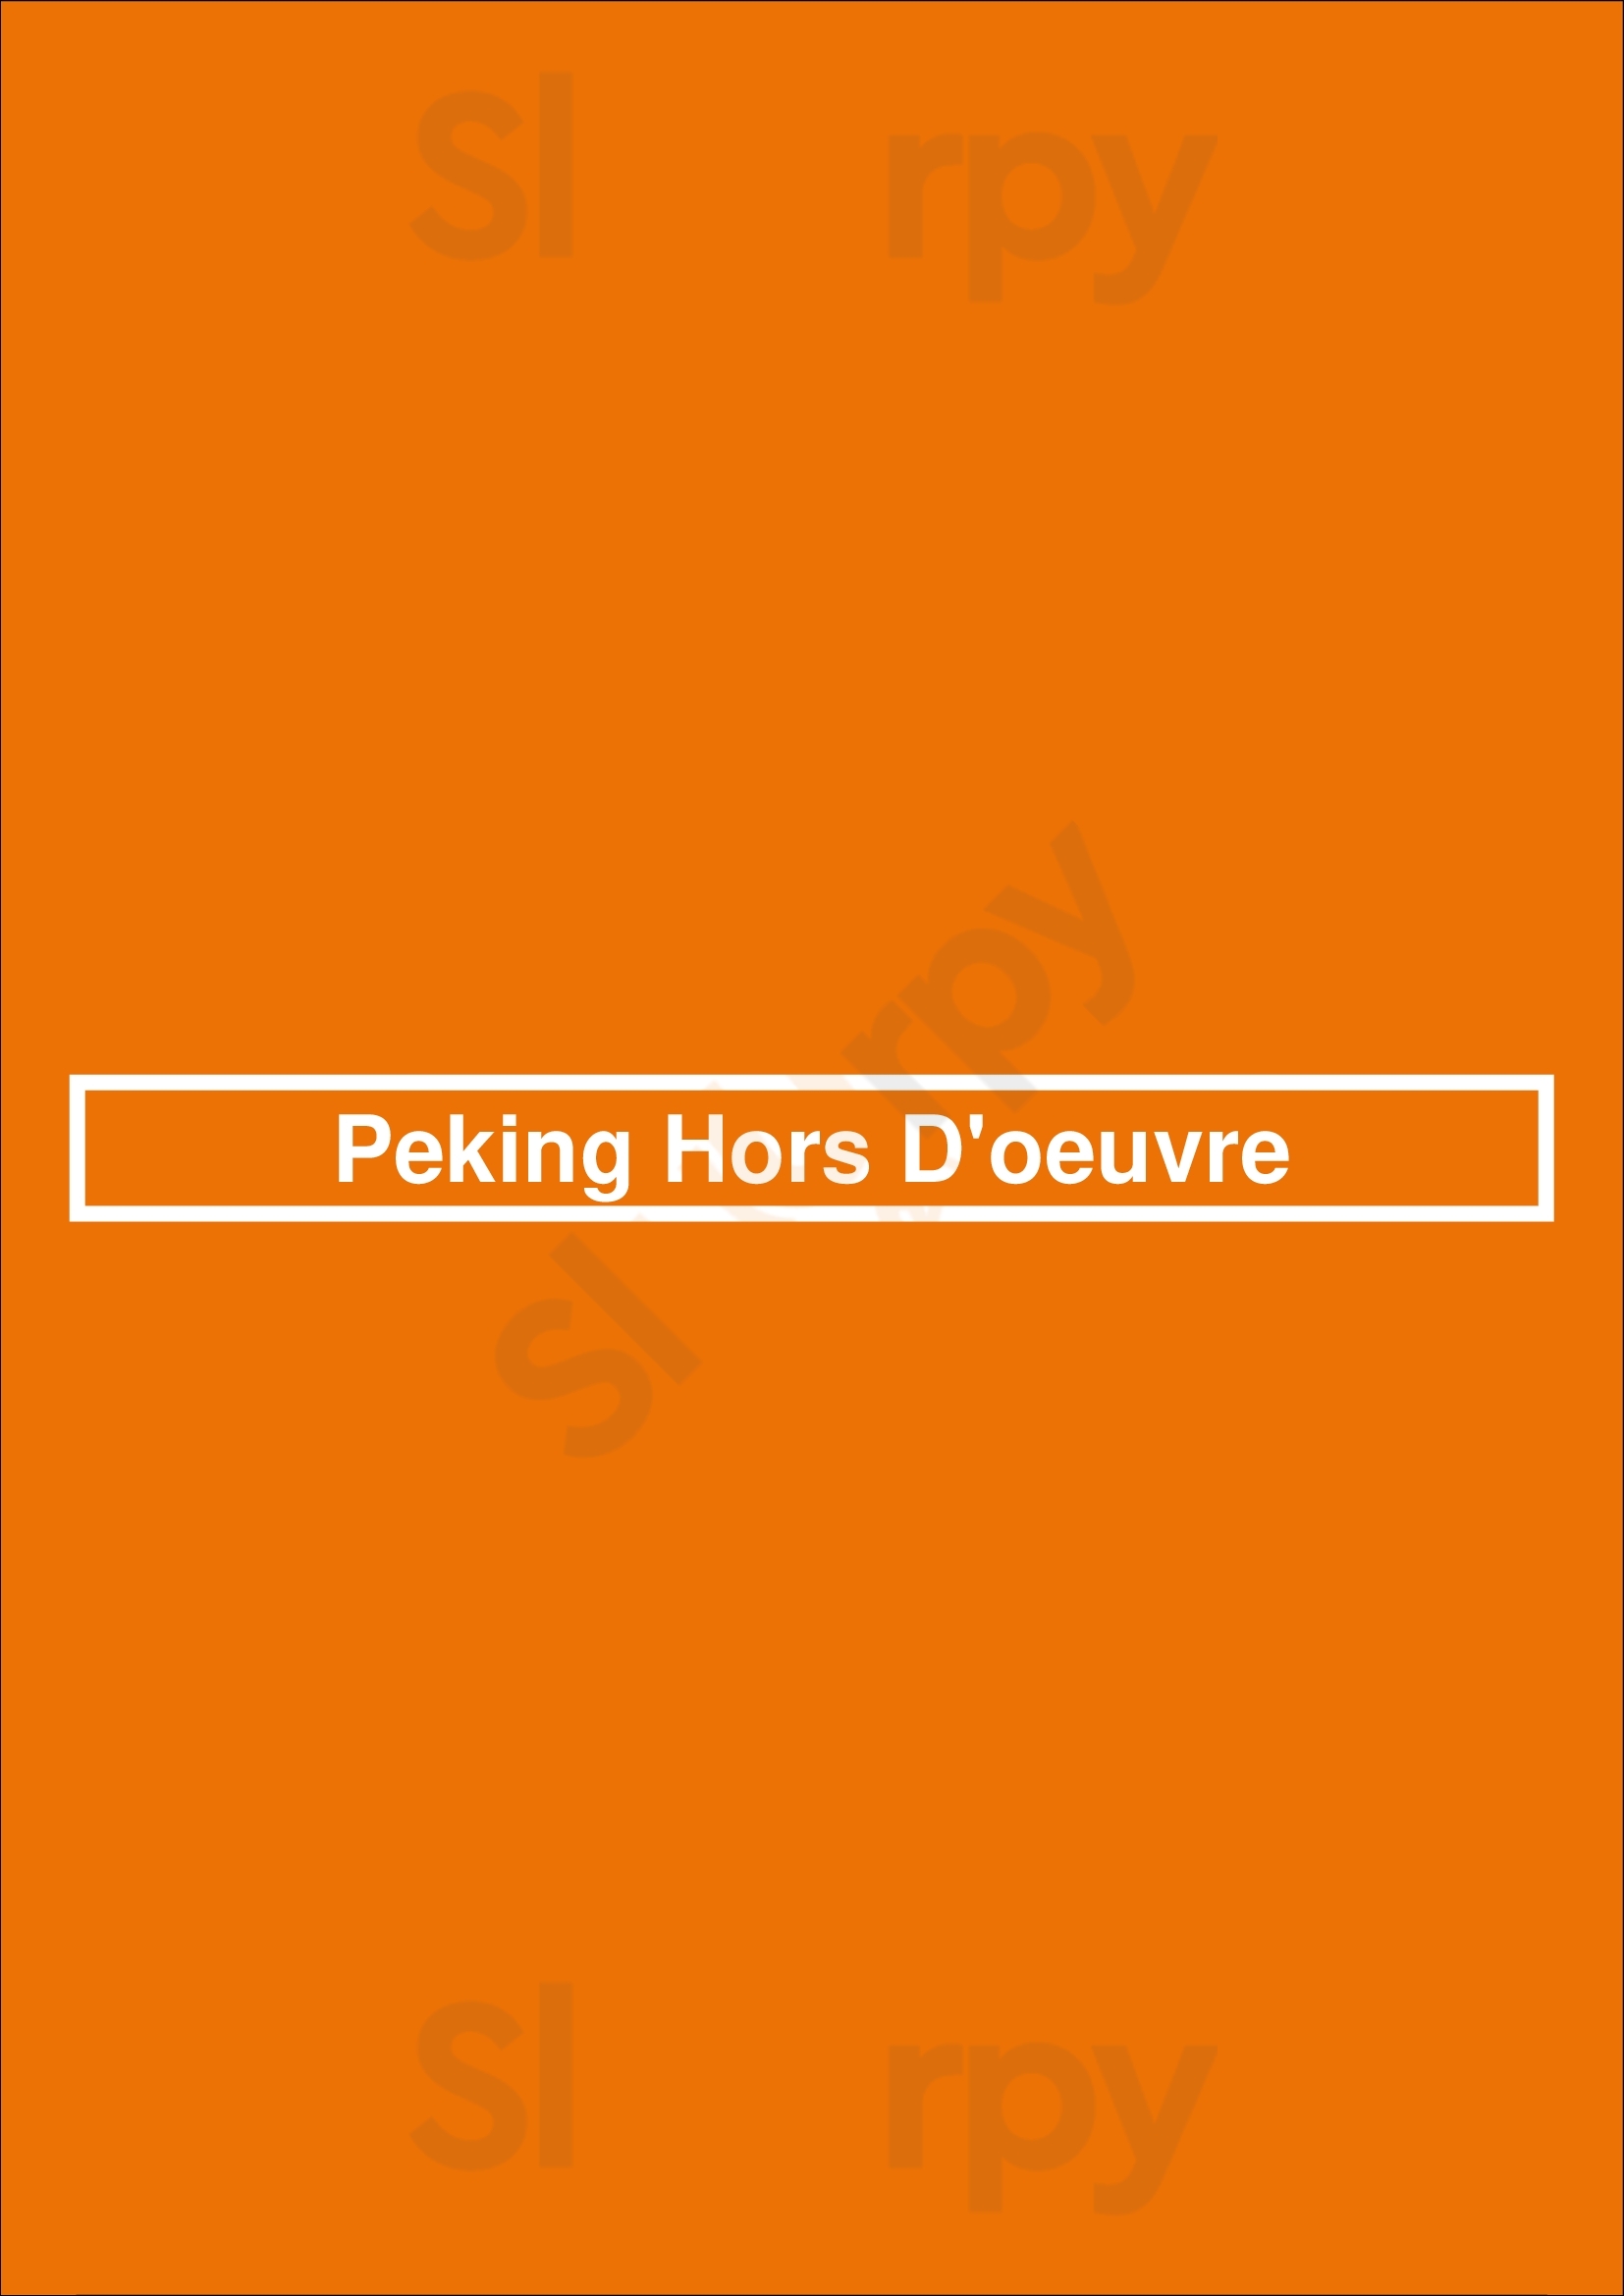 Peking Hors D'oeuvre Chelmsford Menu - 1